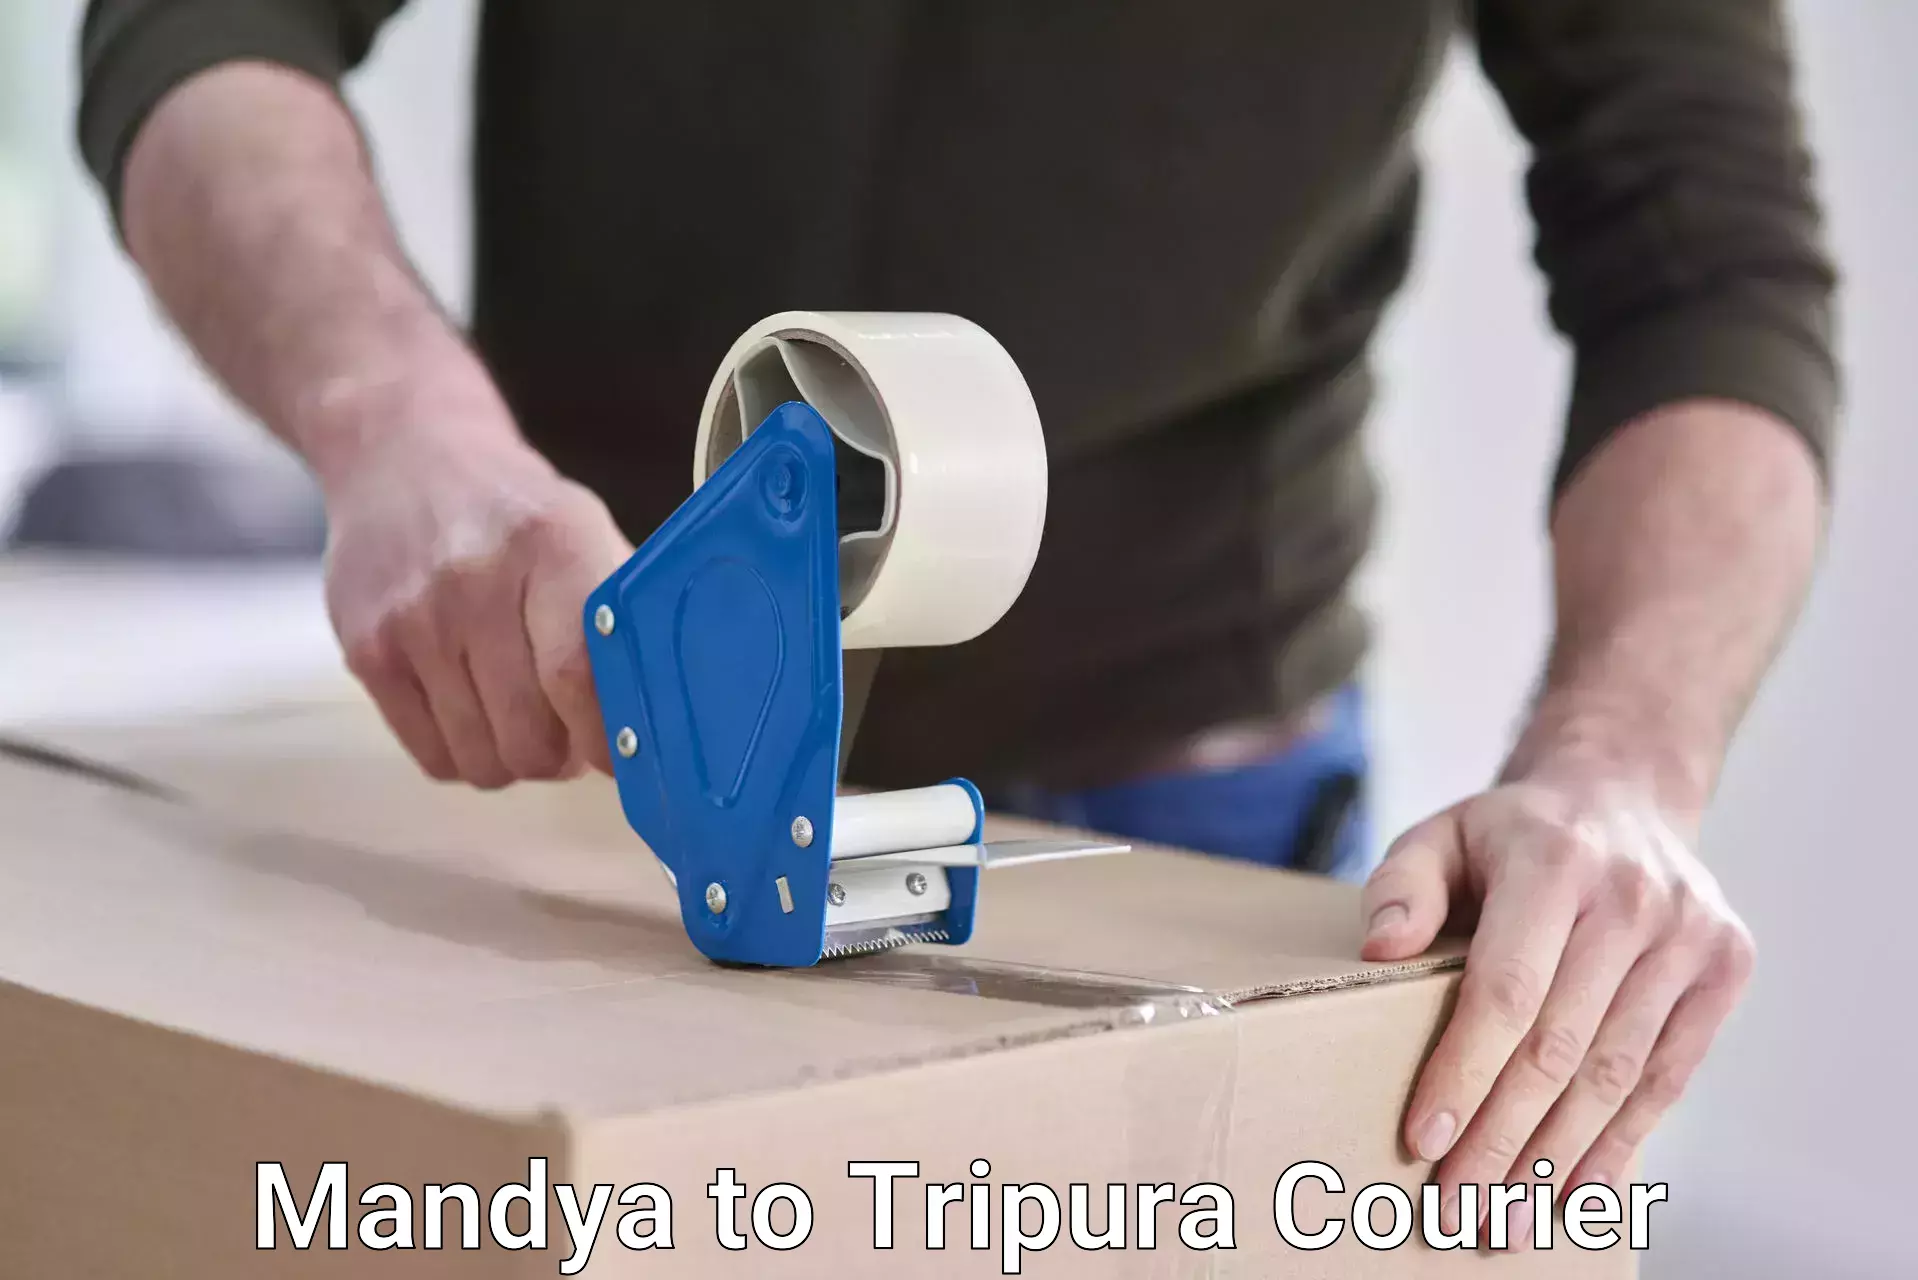 Courier service innovation Mandya to Udaipur Tripura